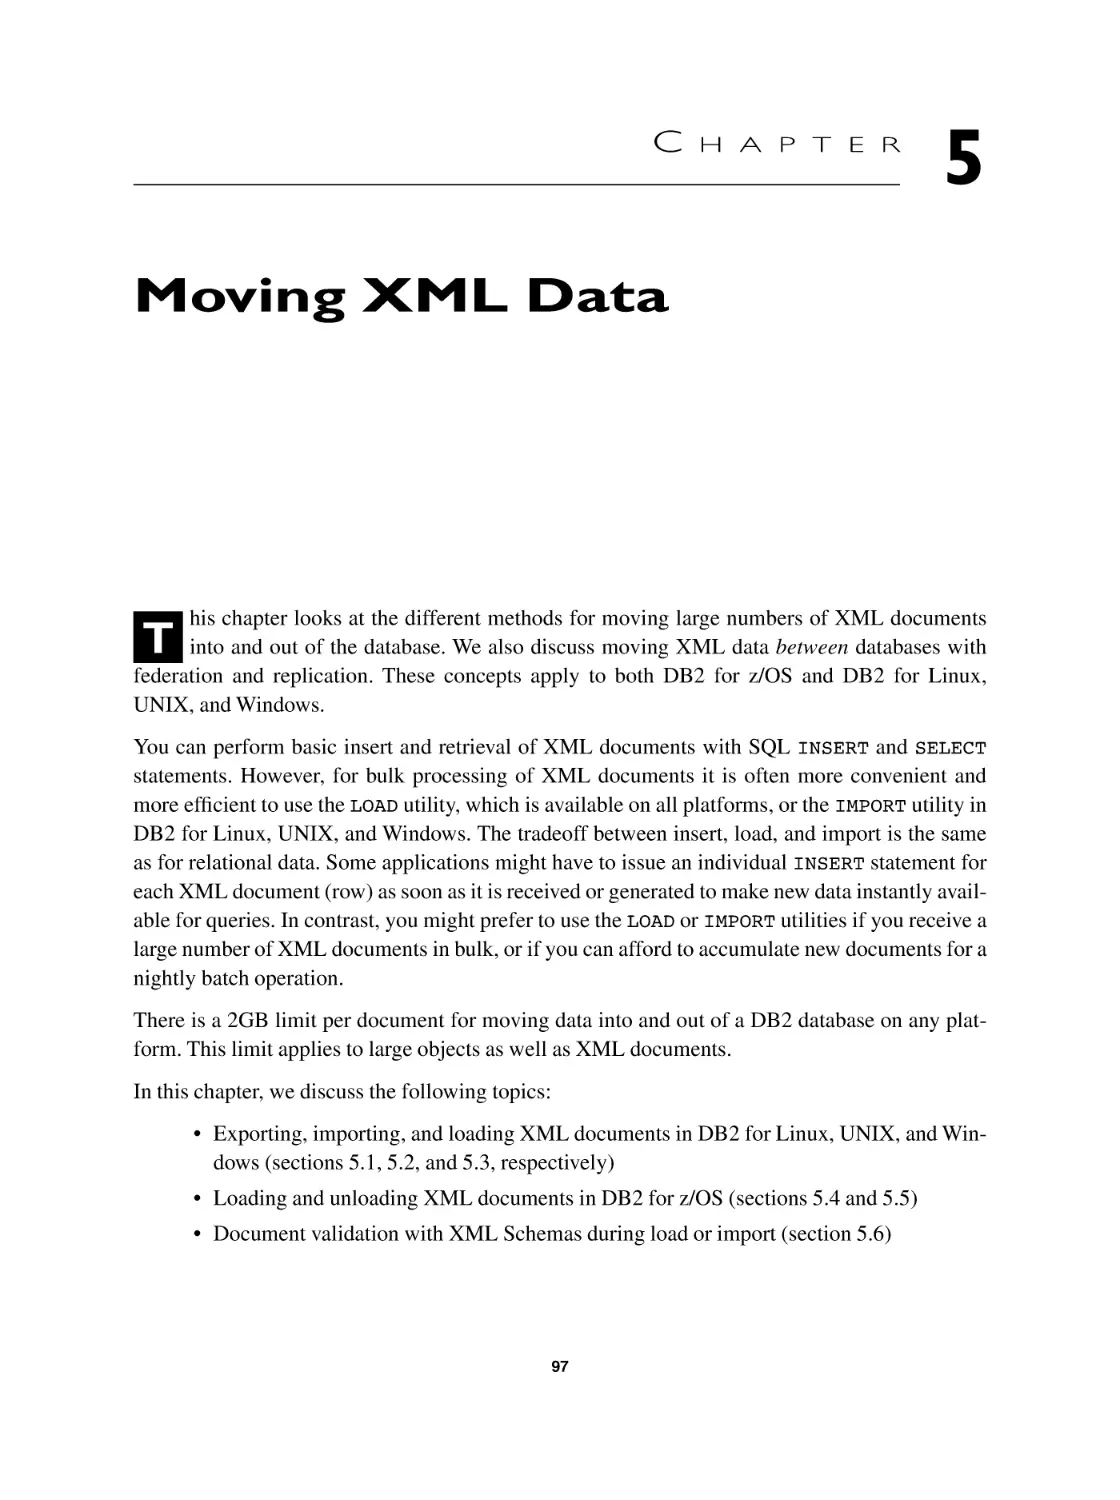 Chapter 5 Moving XML Data